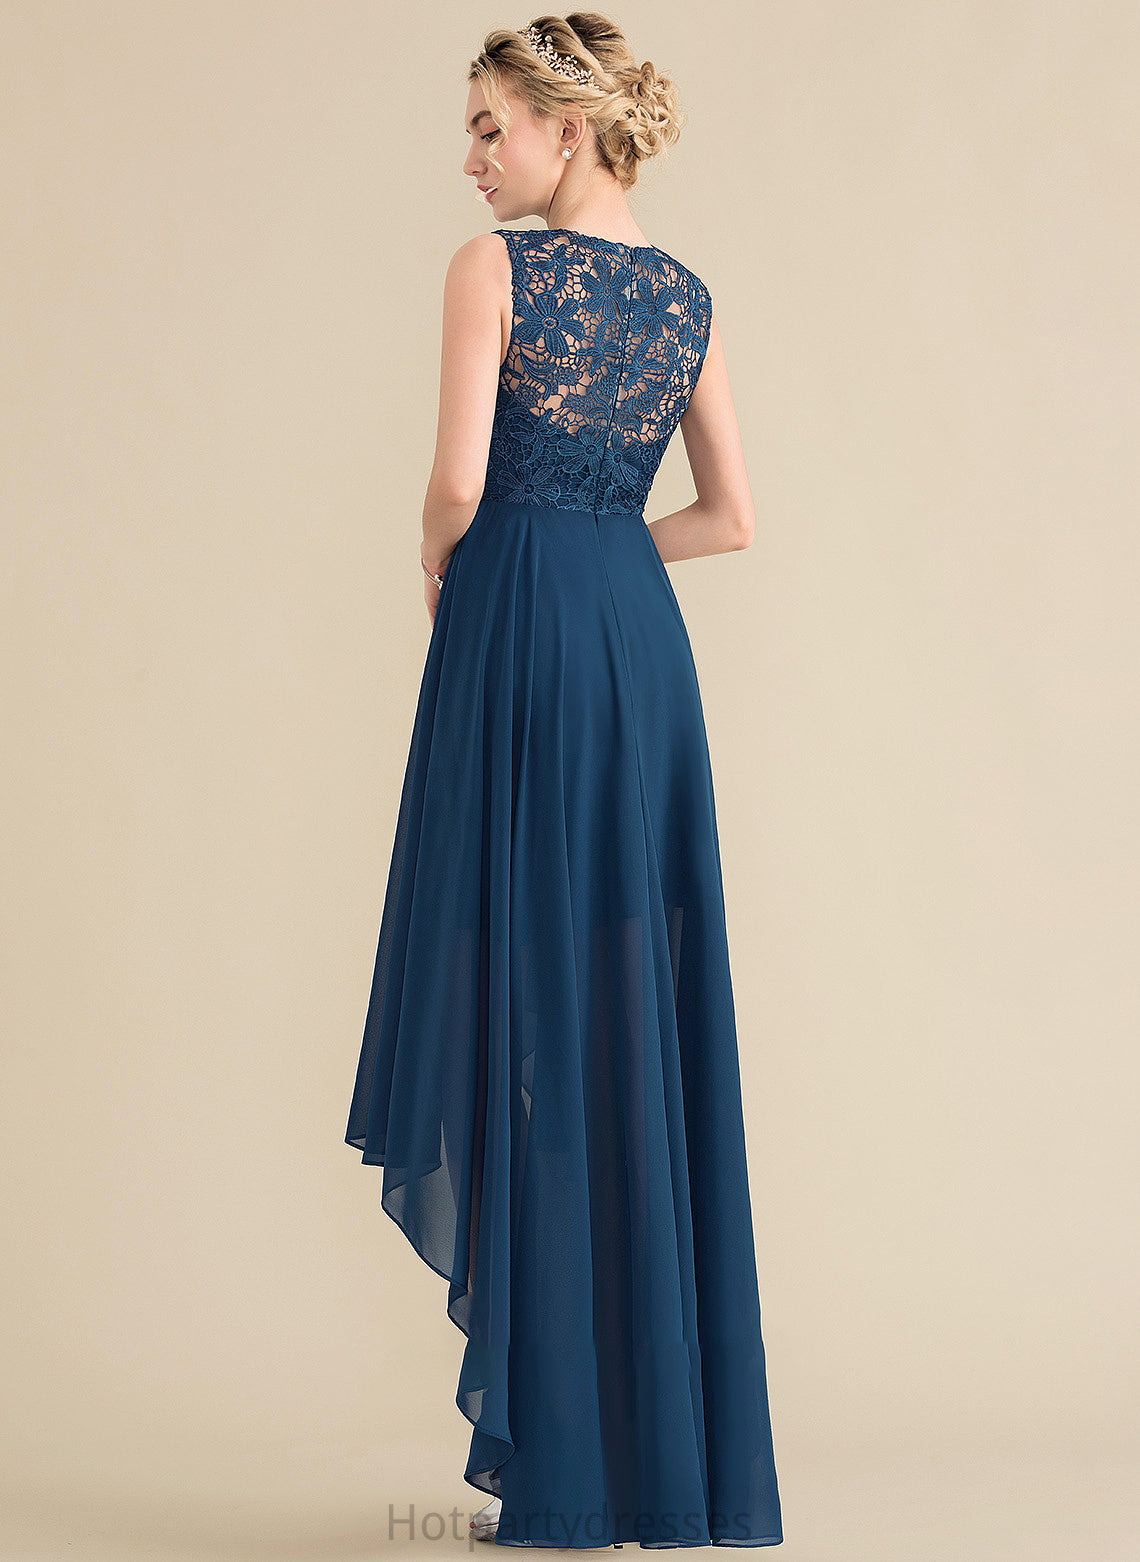 Silhouette Fabric Neckline Lace Asymmetrical Straps A-Line Length ScoopNeck Penny Sleeveless Sheath/Column Bridesmaid Dresses